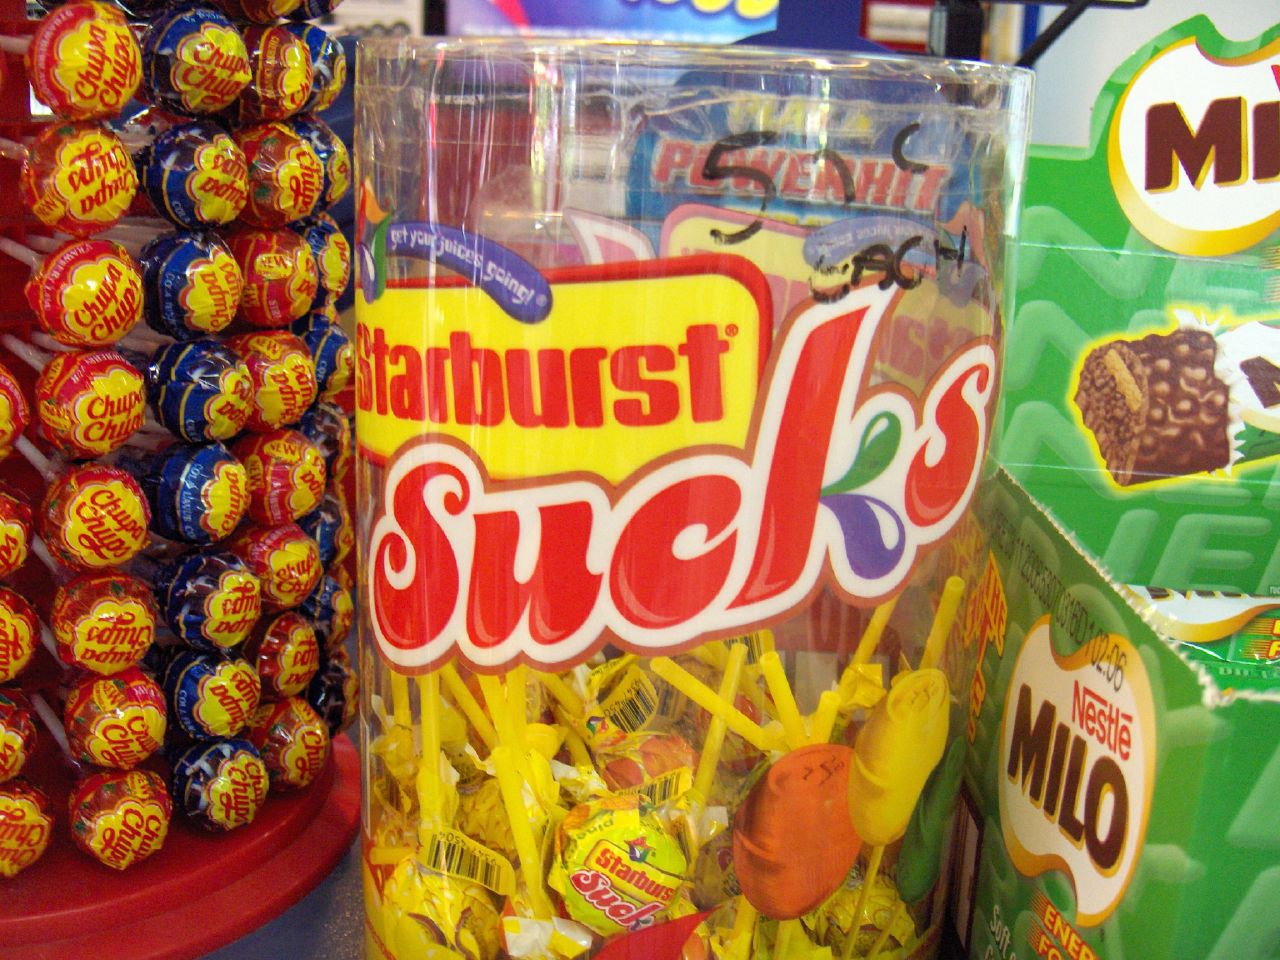 a close up of some candy sticks on a shelf